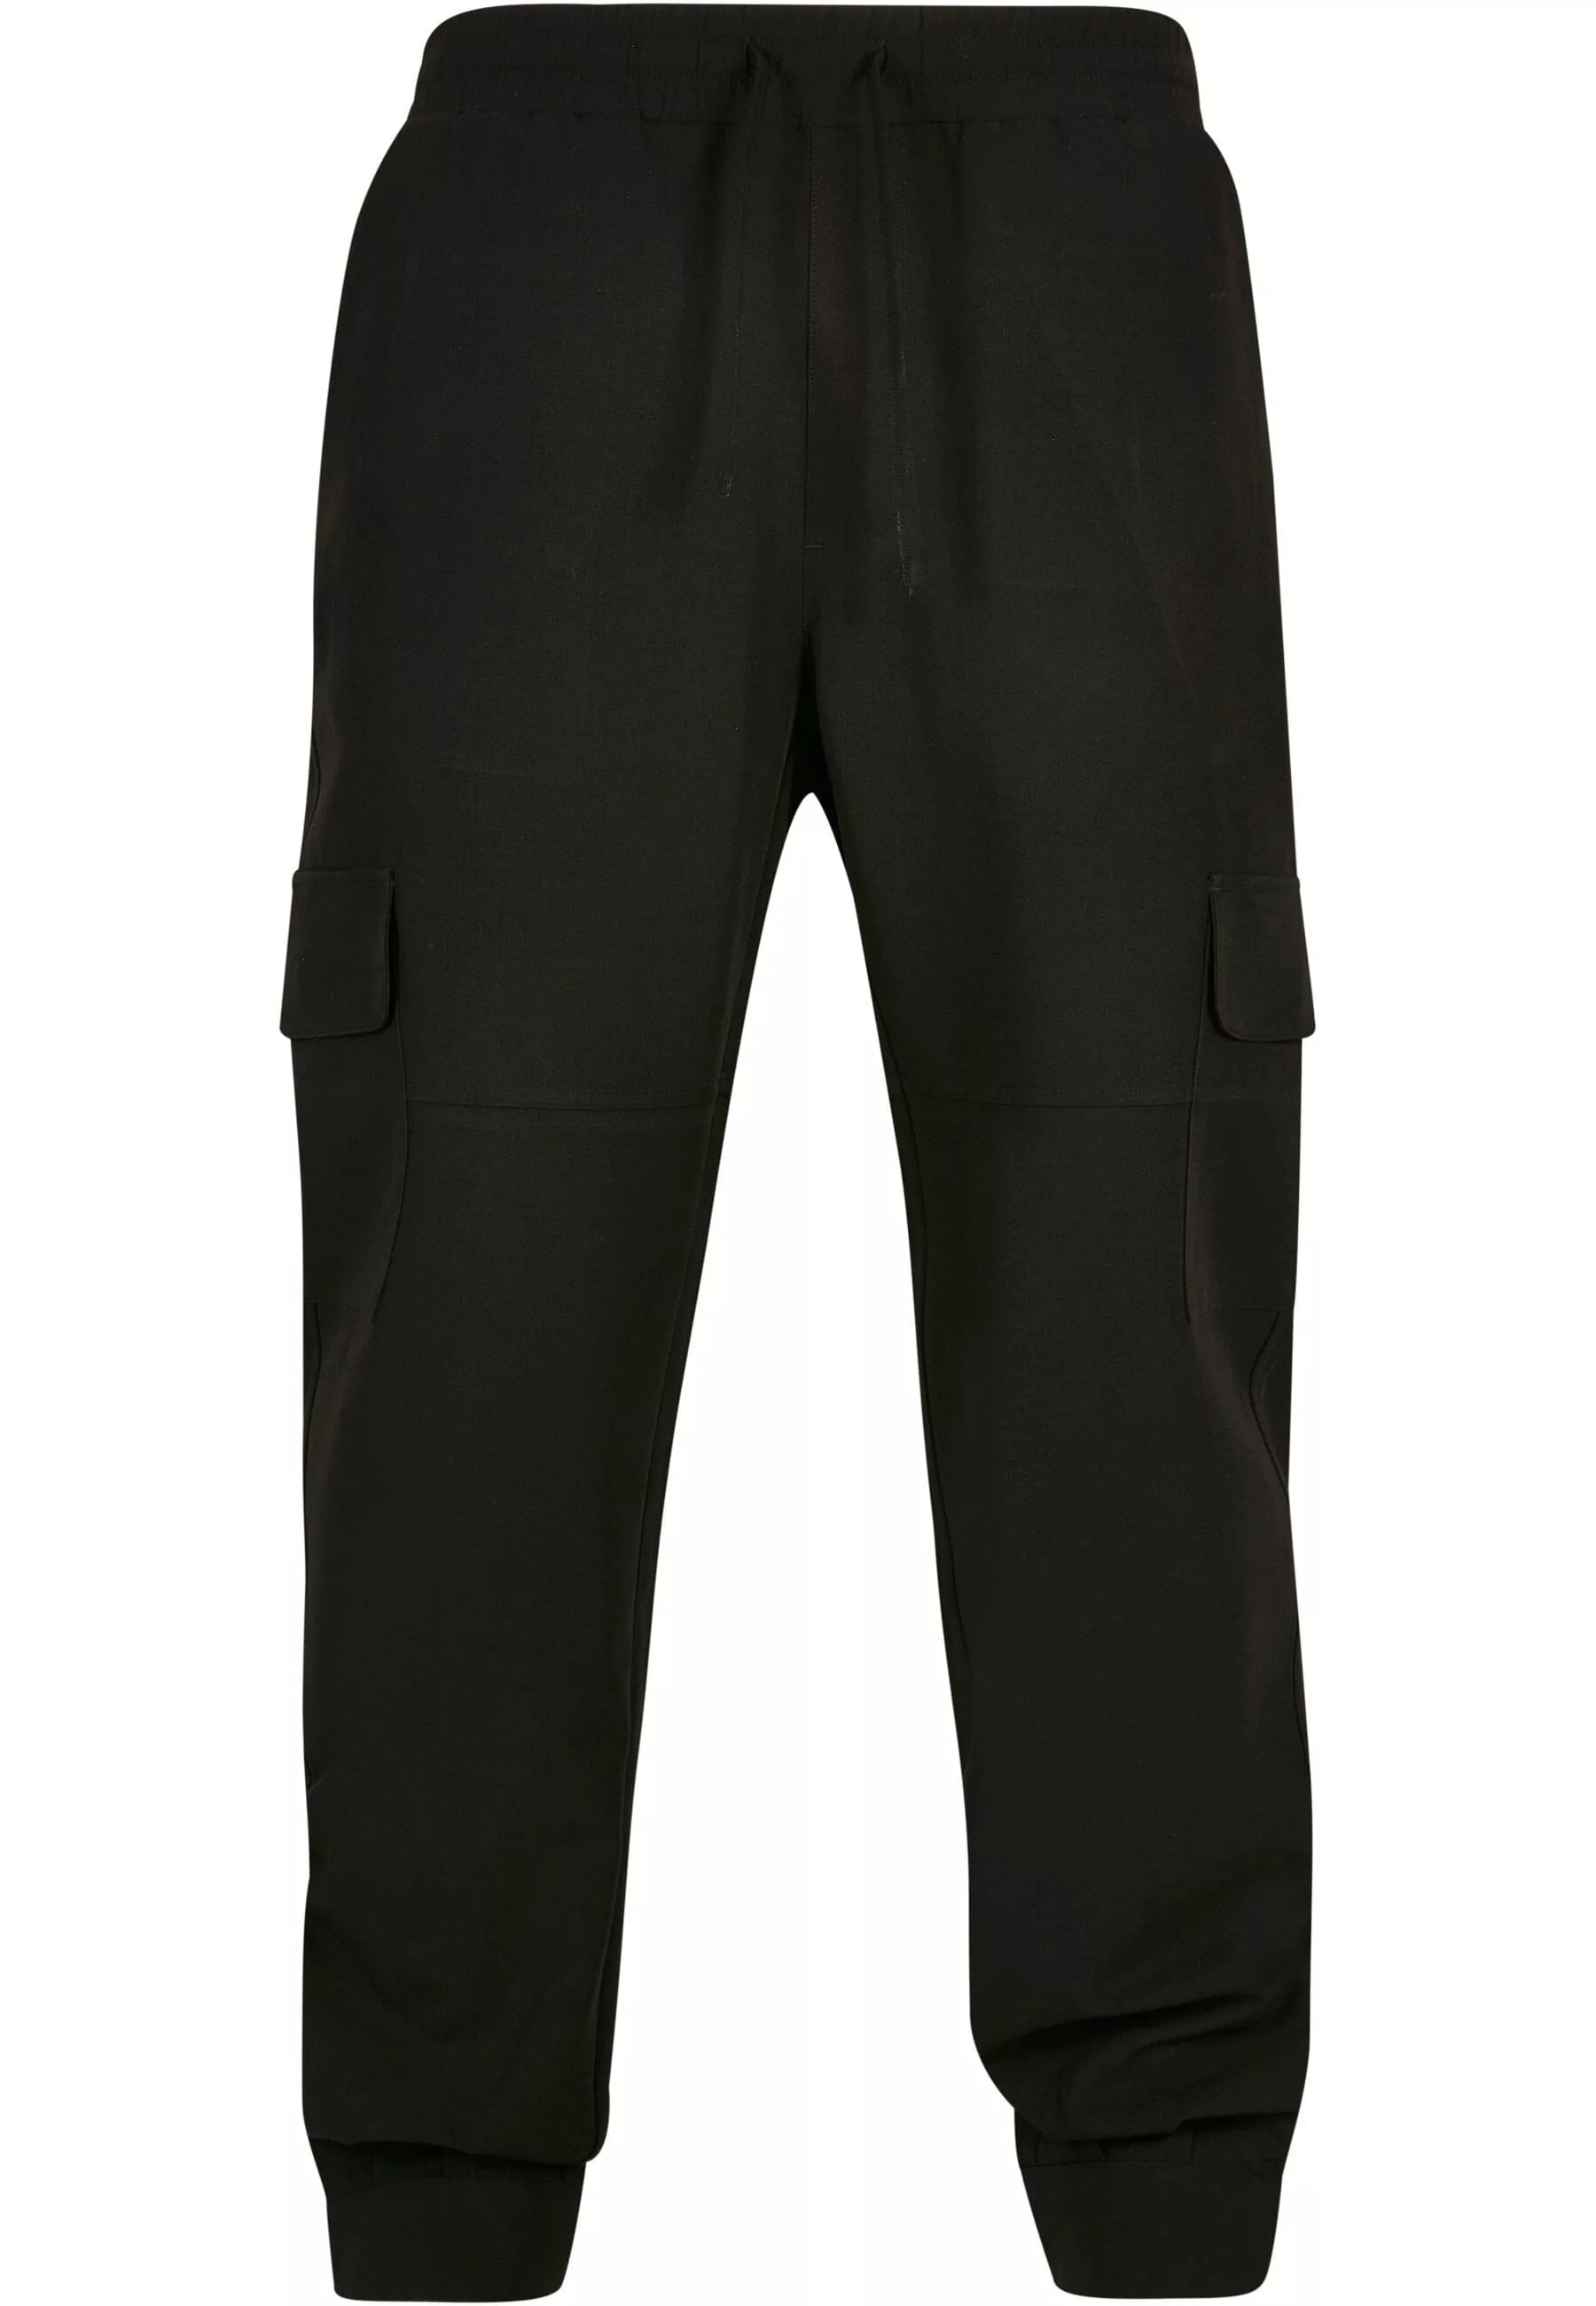 URBAN CLASSICS Jogginghose "Urban Classics Herren Comfort Military Pants", günstig online kaufen